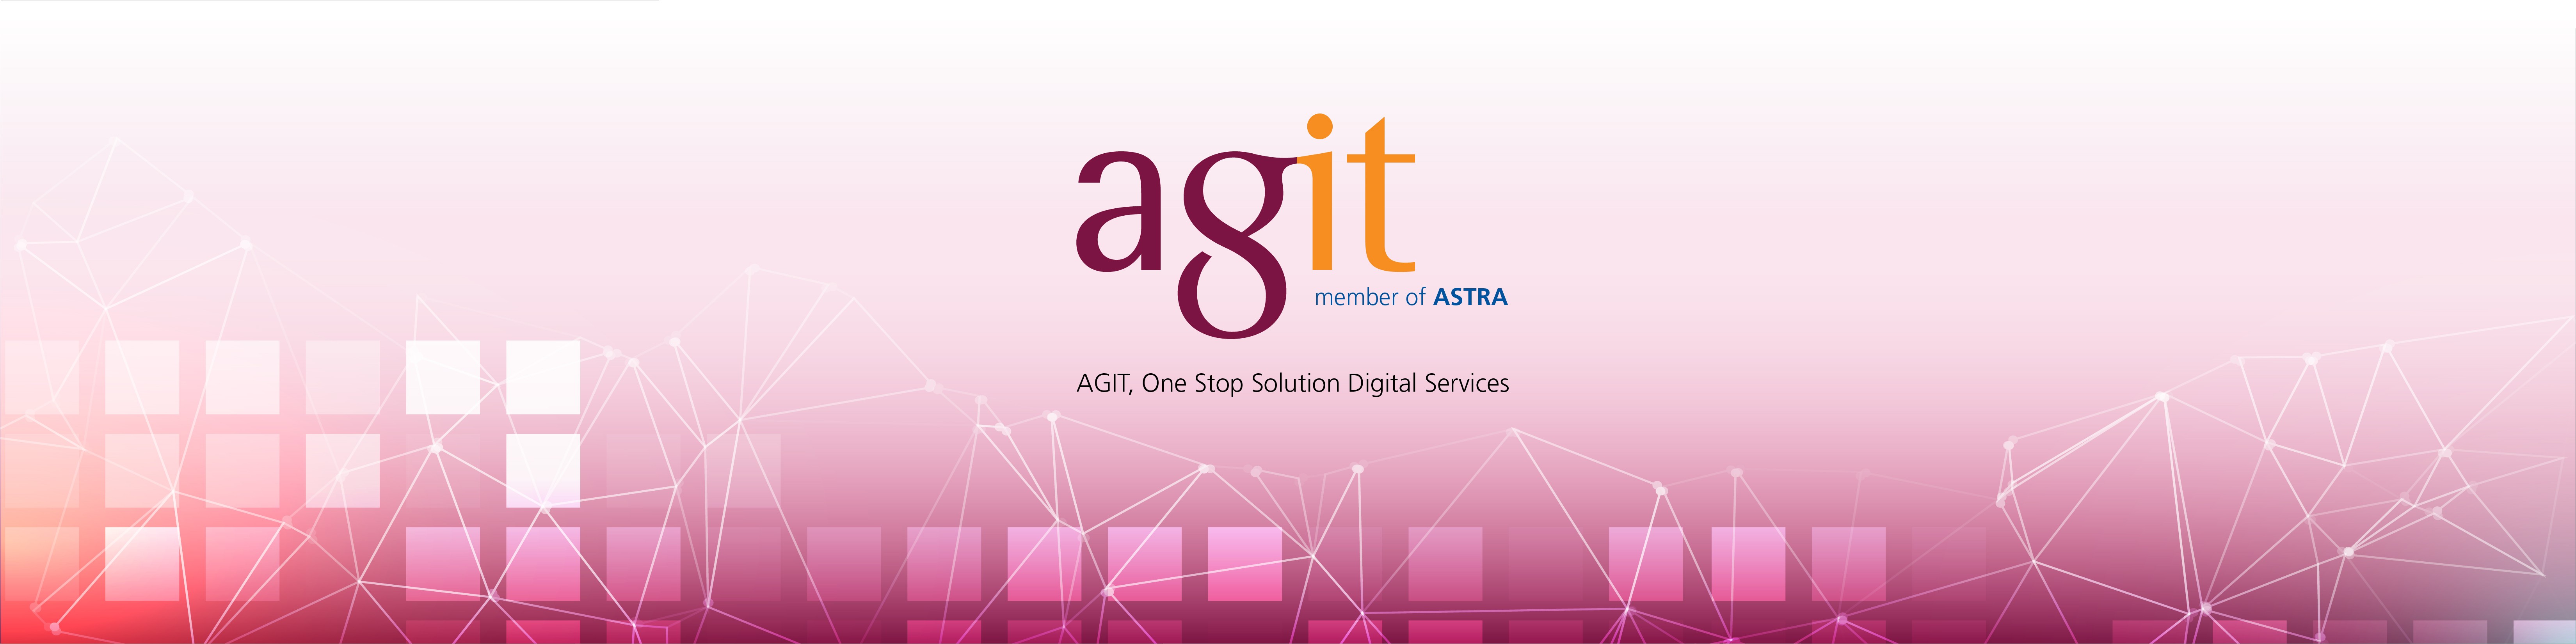 Pt Astra Graphia Information Technology Agit Linkedin